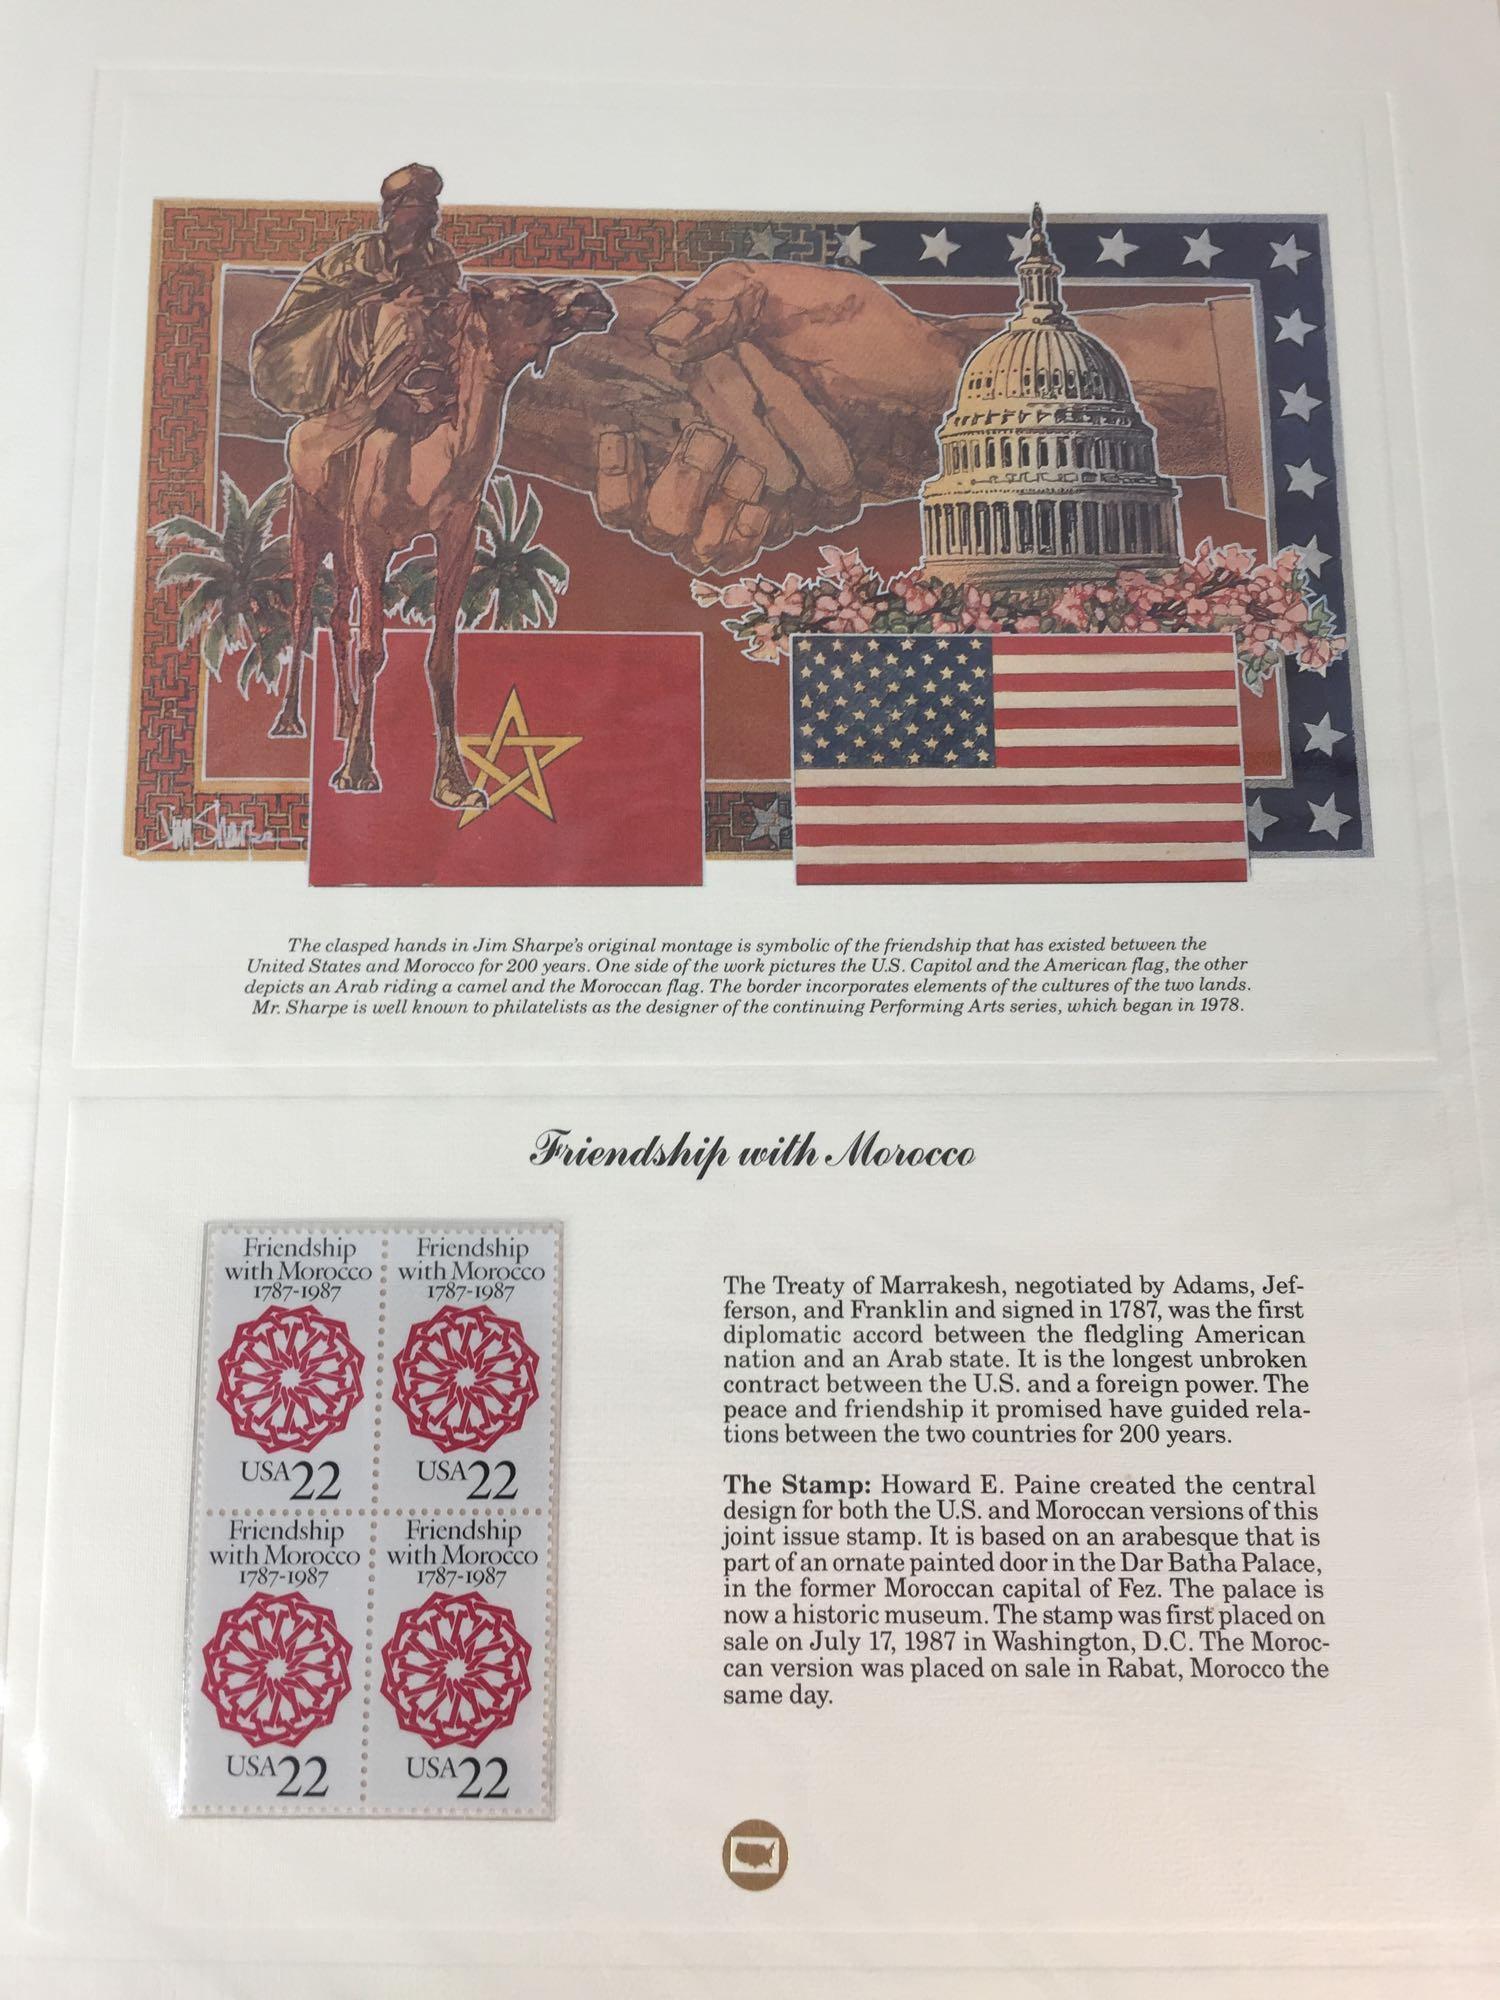 US Commemorative Stamp Collection Album